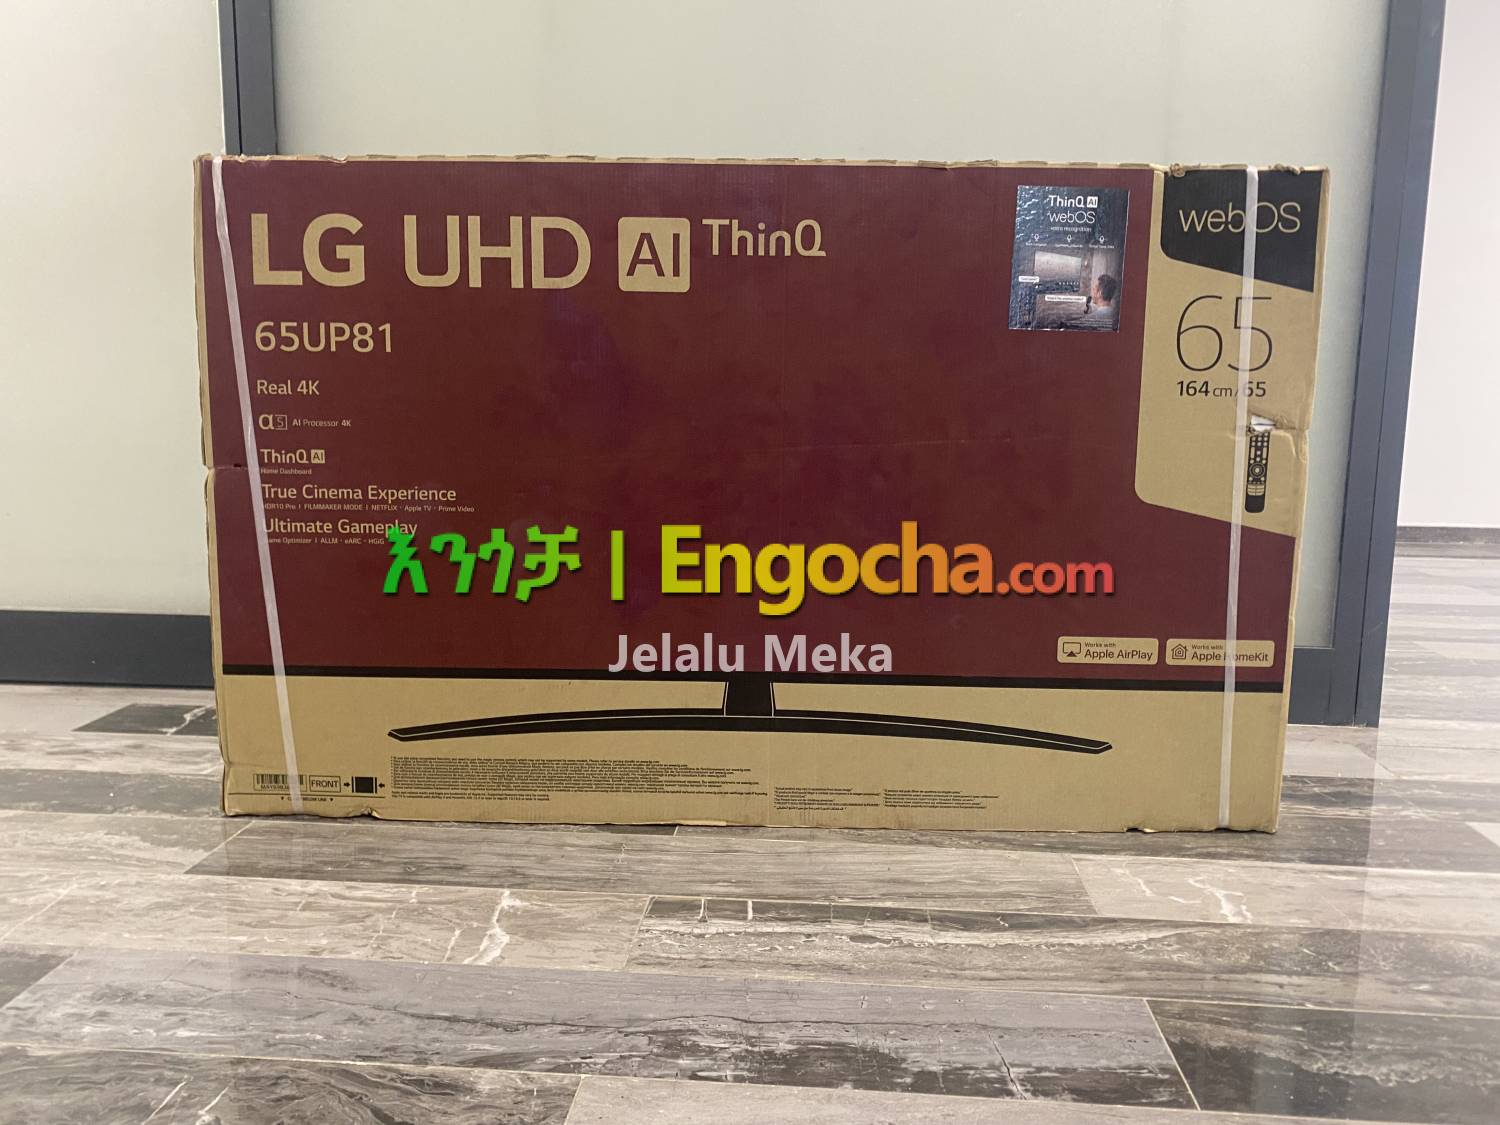 LG UHD AI ThinQ 65inch 65UP81 television for sale & price in Ethiopia -  Engocha.com | Buy LG UHD AI ThinQ 65inch 65UP81 television in Addis Ababa  Ethiopia | Engocha.com